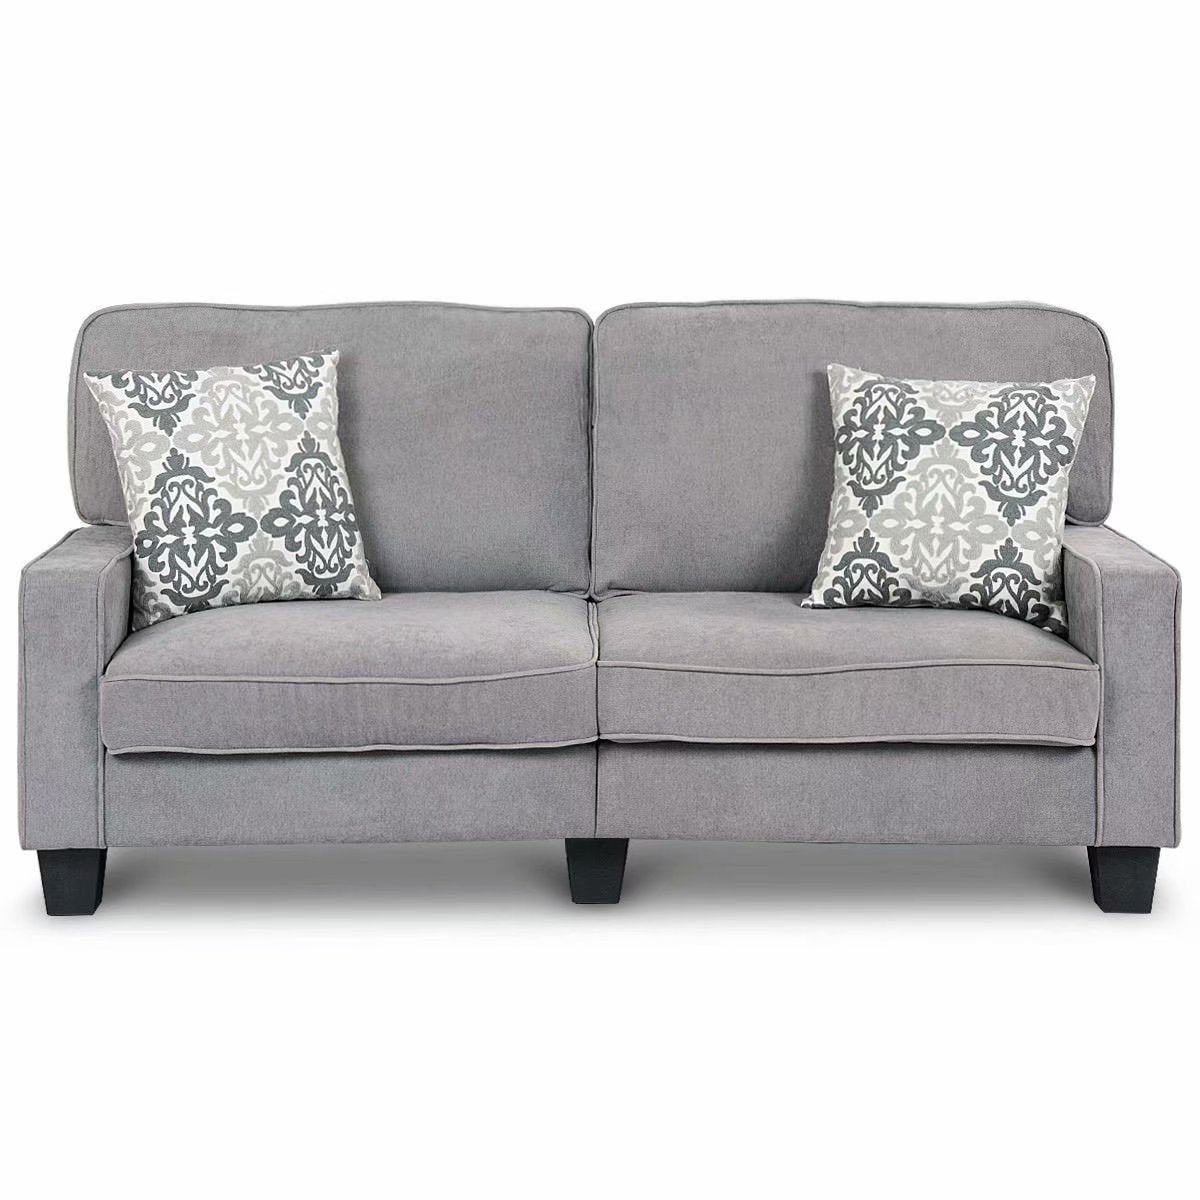 Home Living Room Upholstered Curved Armrest Fabric Sofa